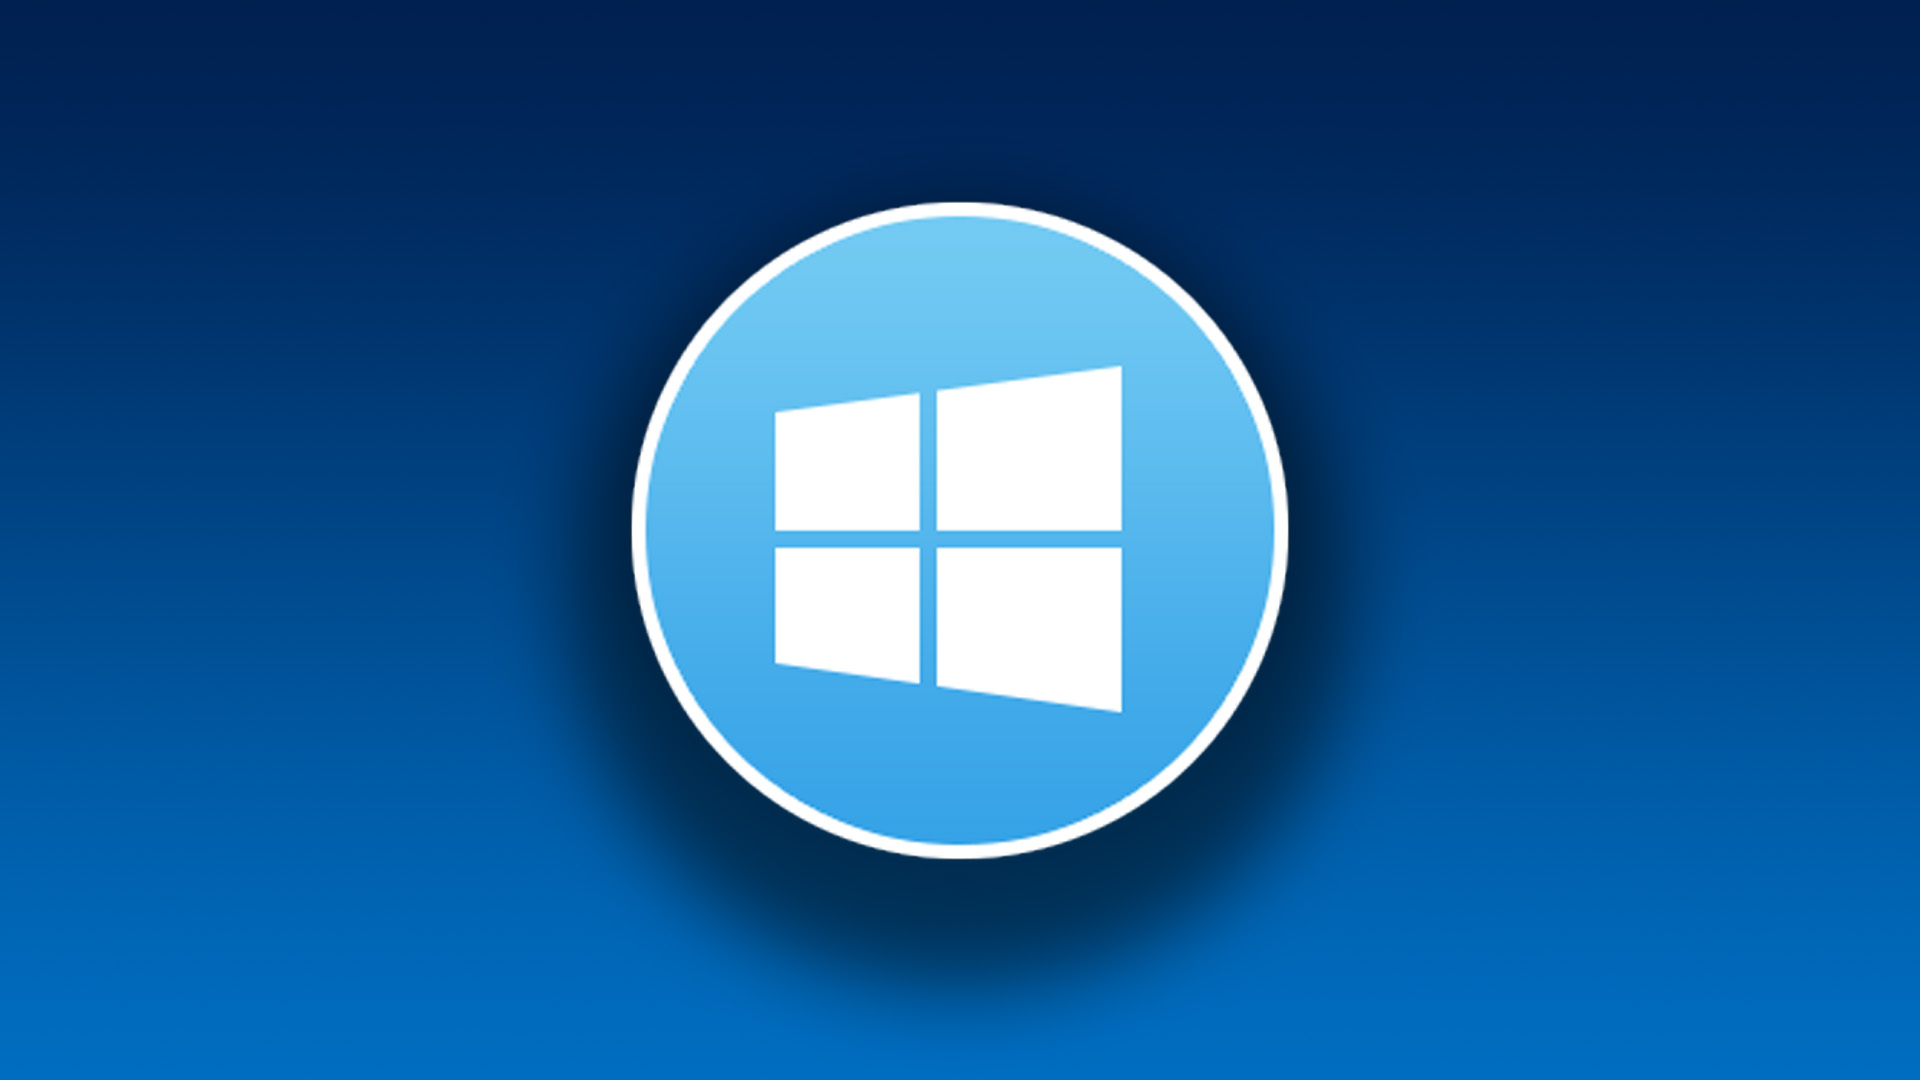 Steam Windows 8.1 Start Tile Set by Necromod 